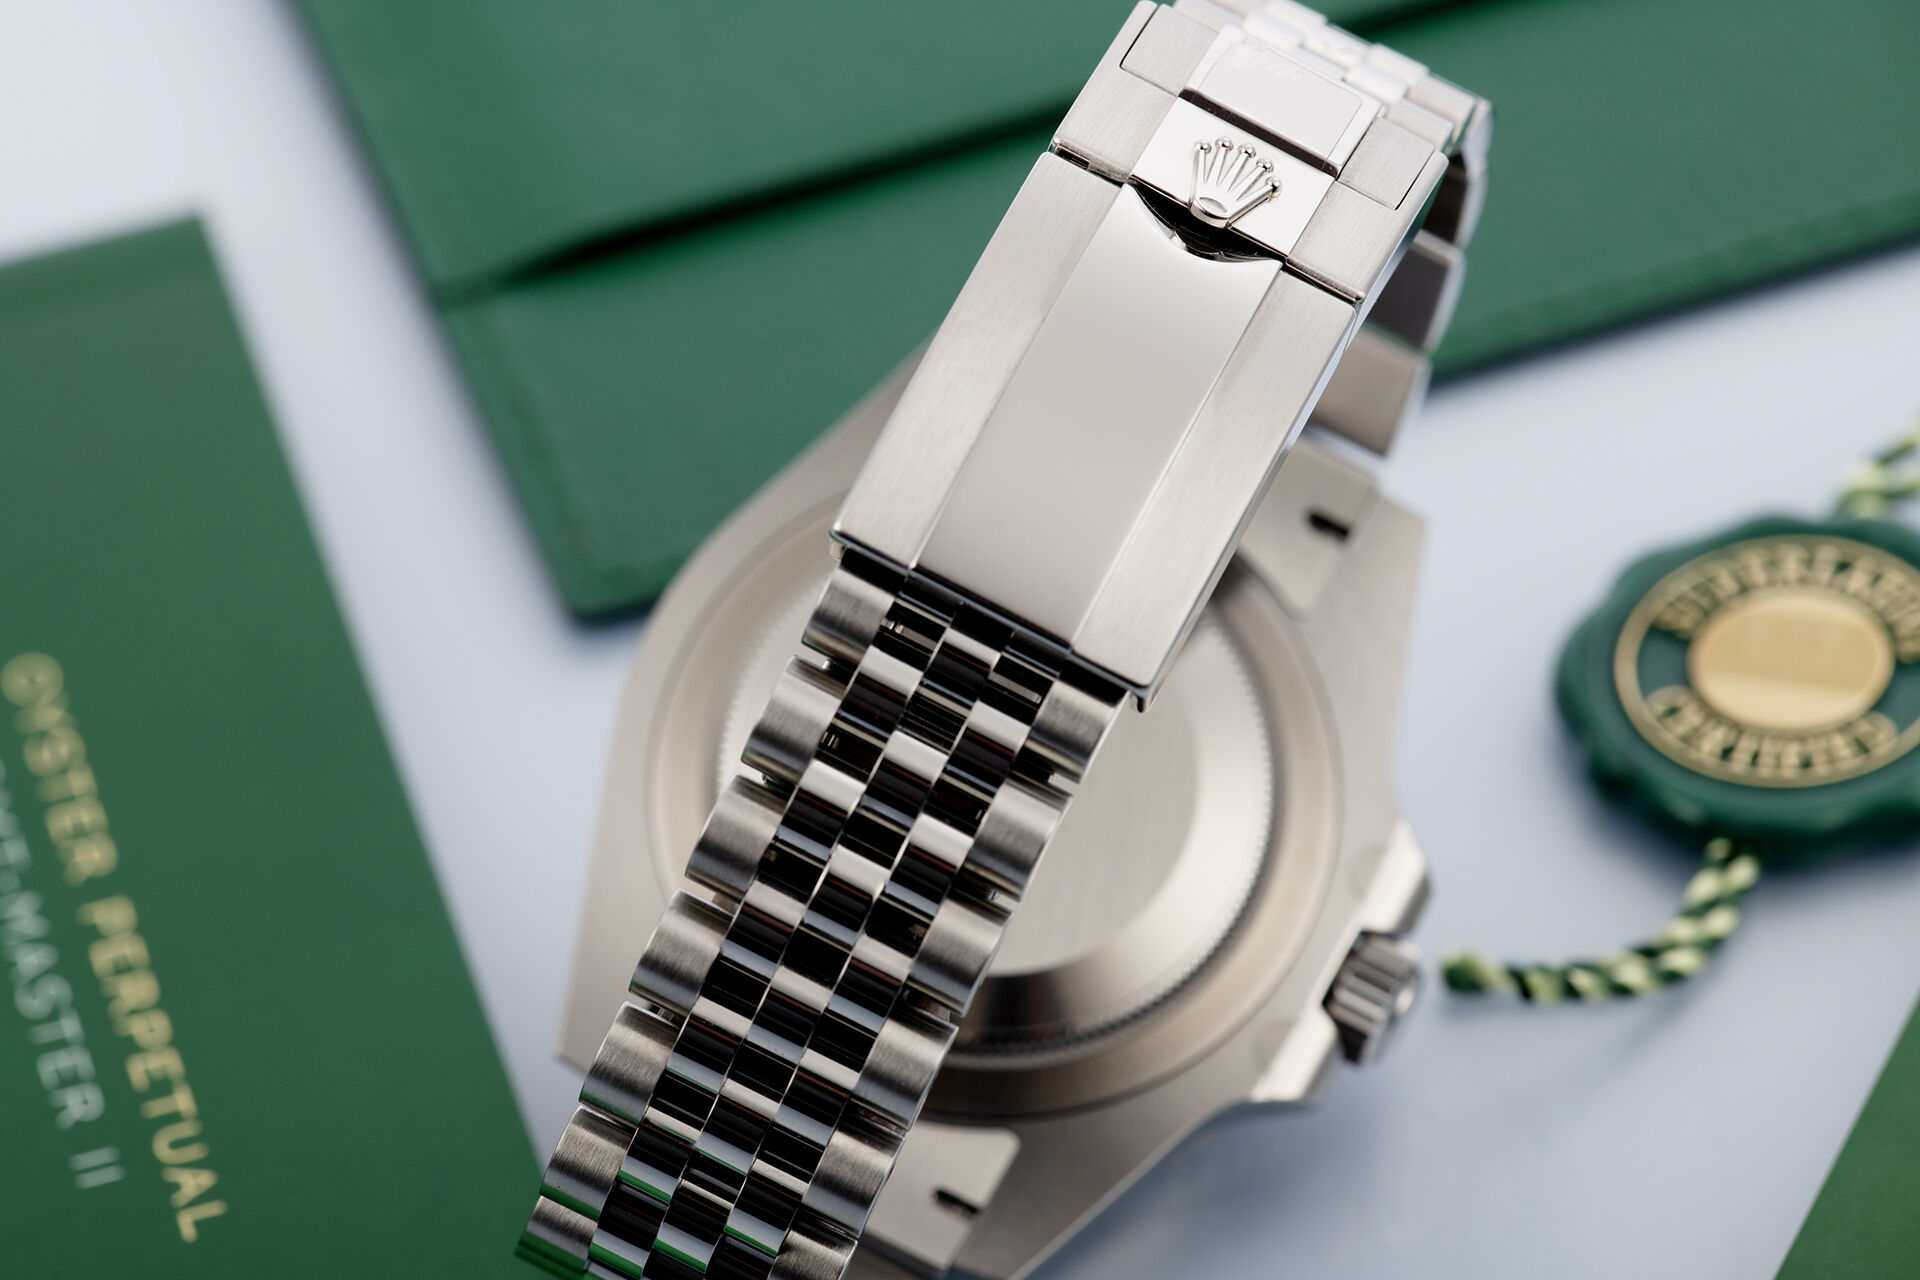 ref 126710BLNR | 'Brand New' 5 Year Warranty  | Rolex GMT-Master II